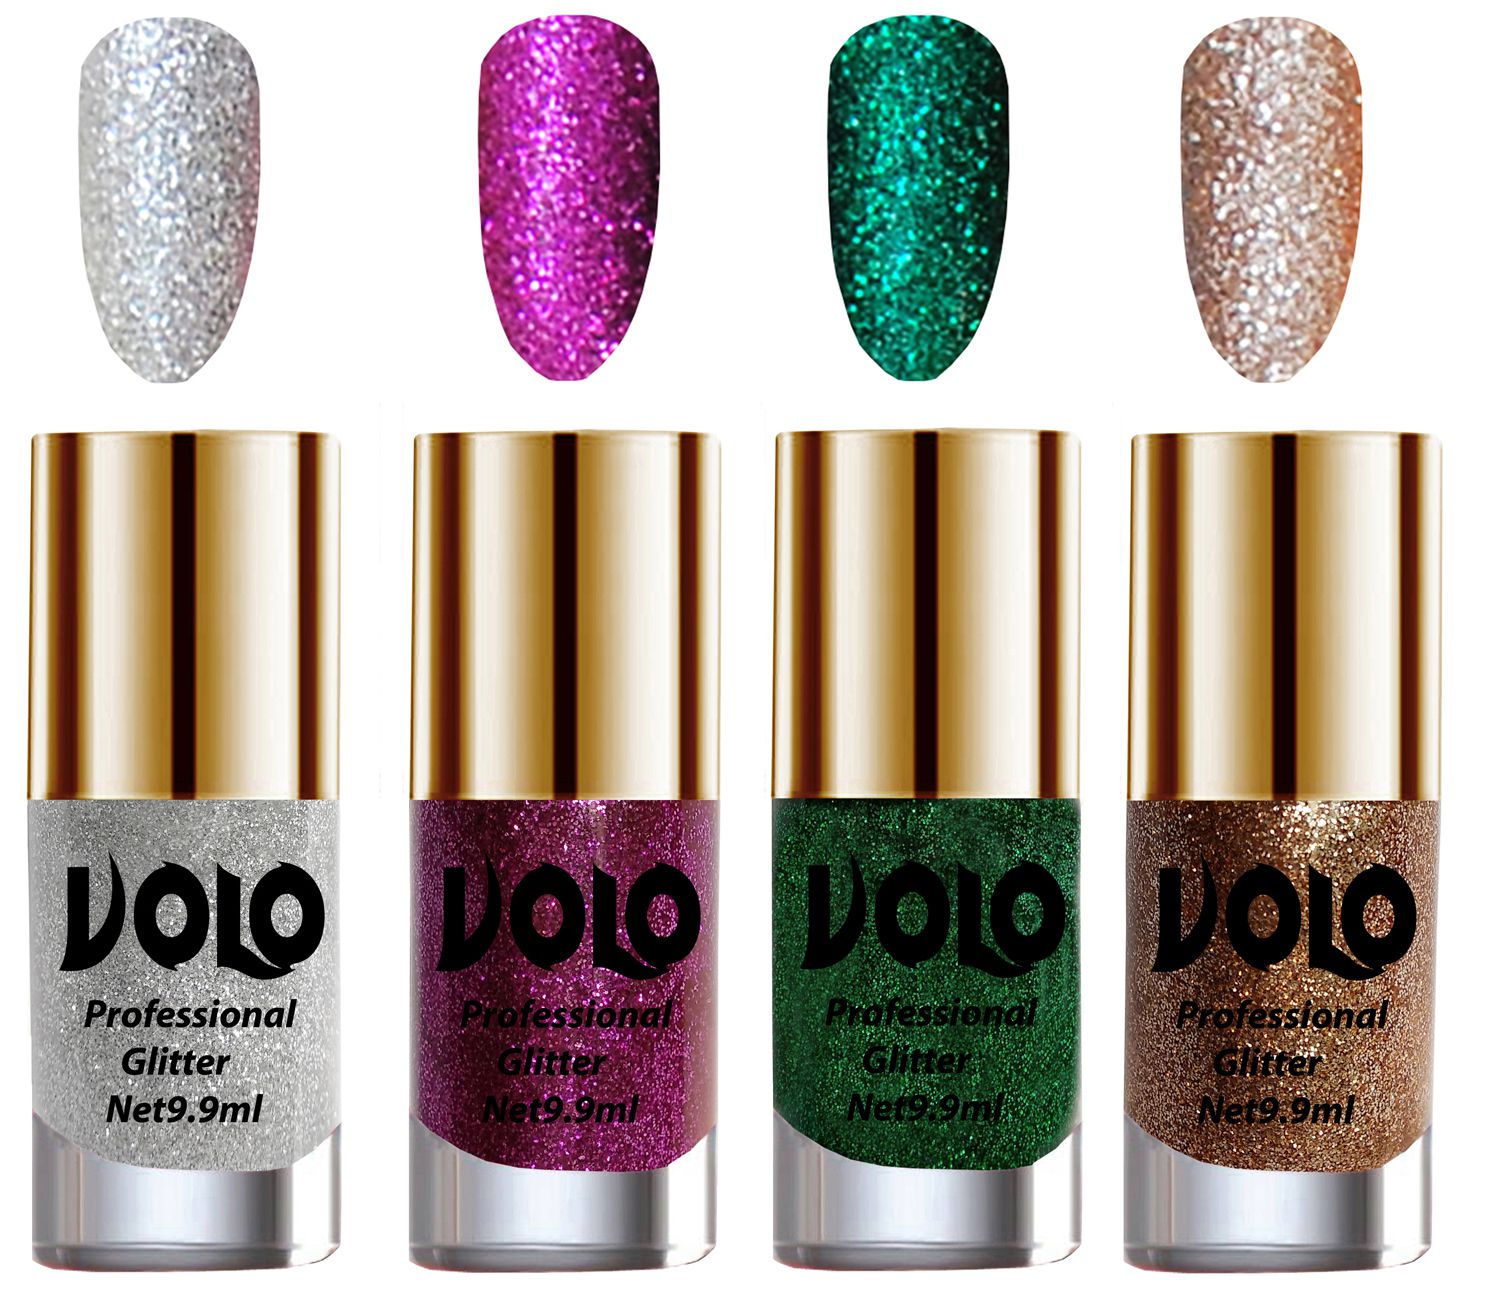     			VOLO Professionally Used Glitter Shine Nail Polish Silver,Purple,Green Gold Pack of 4 39 mL